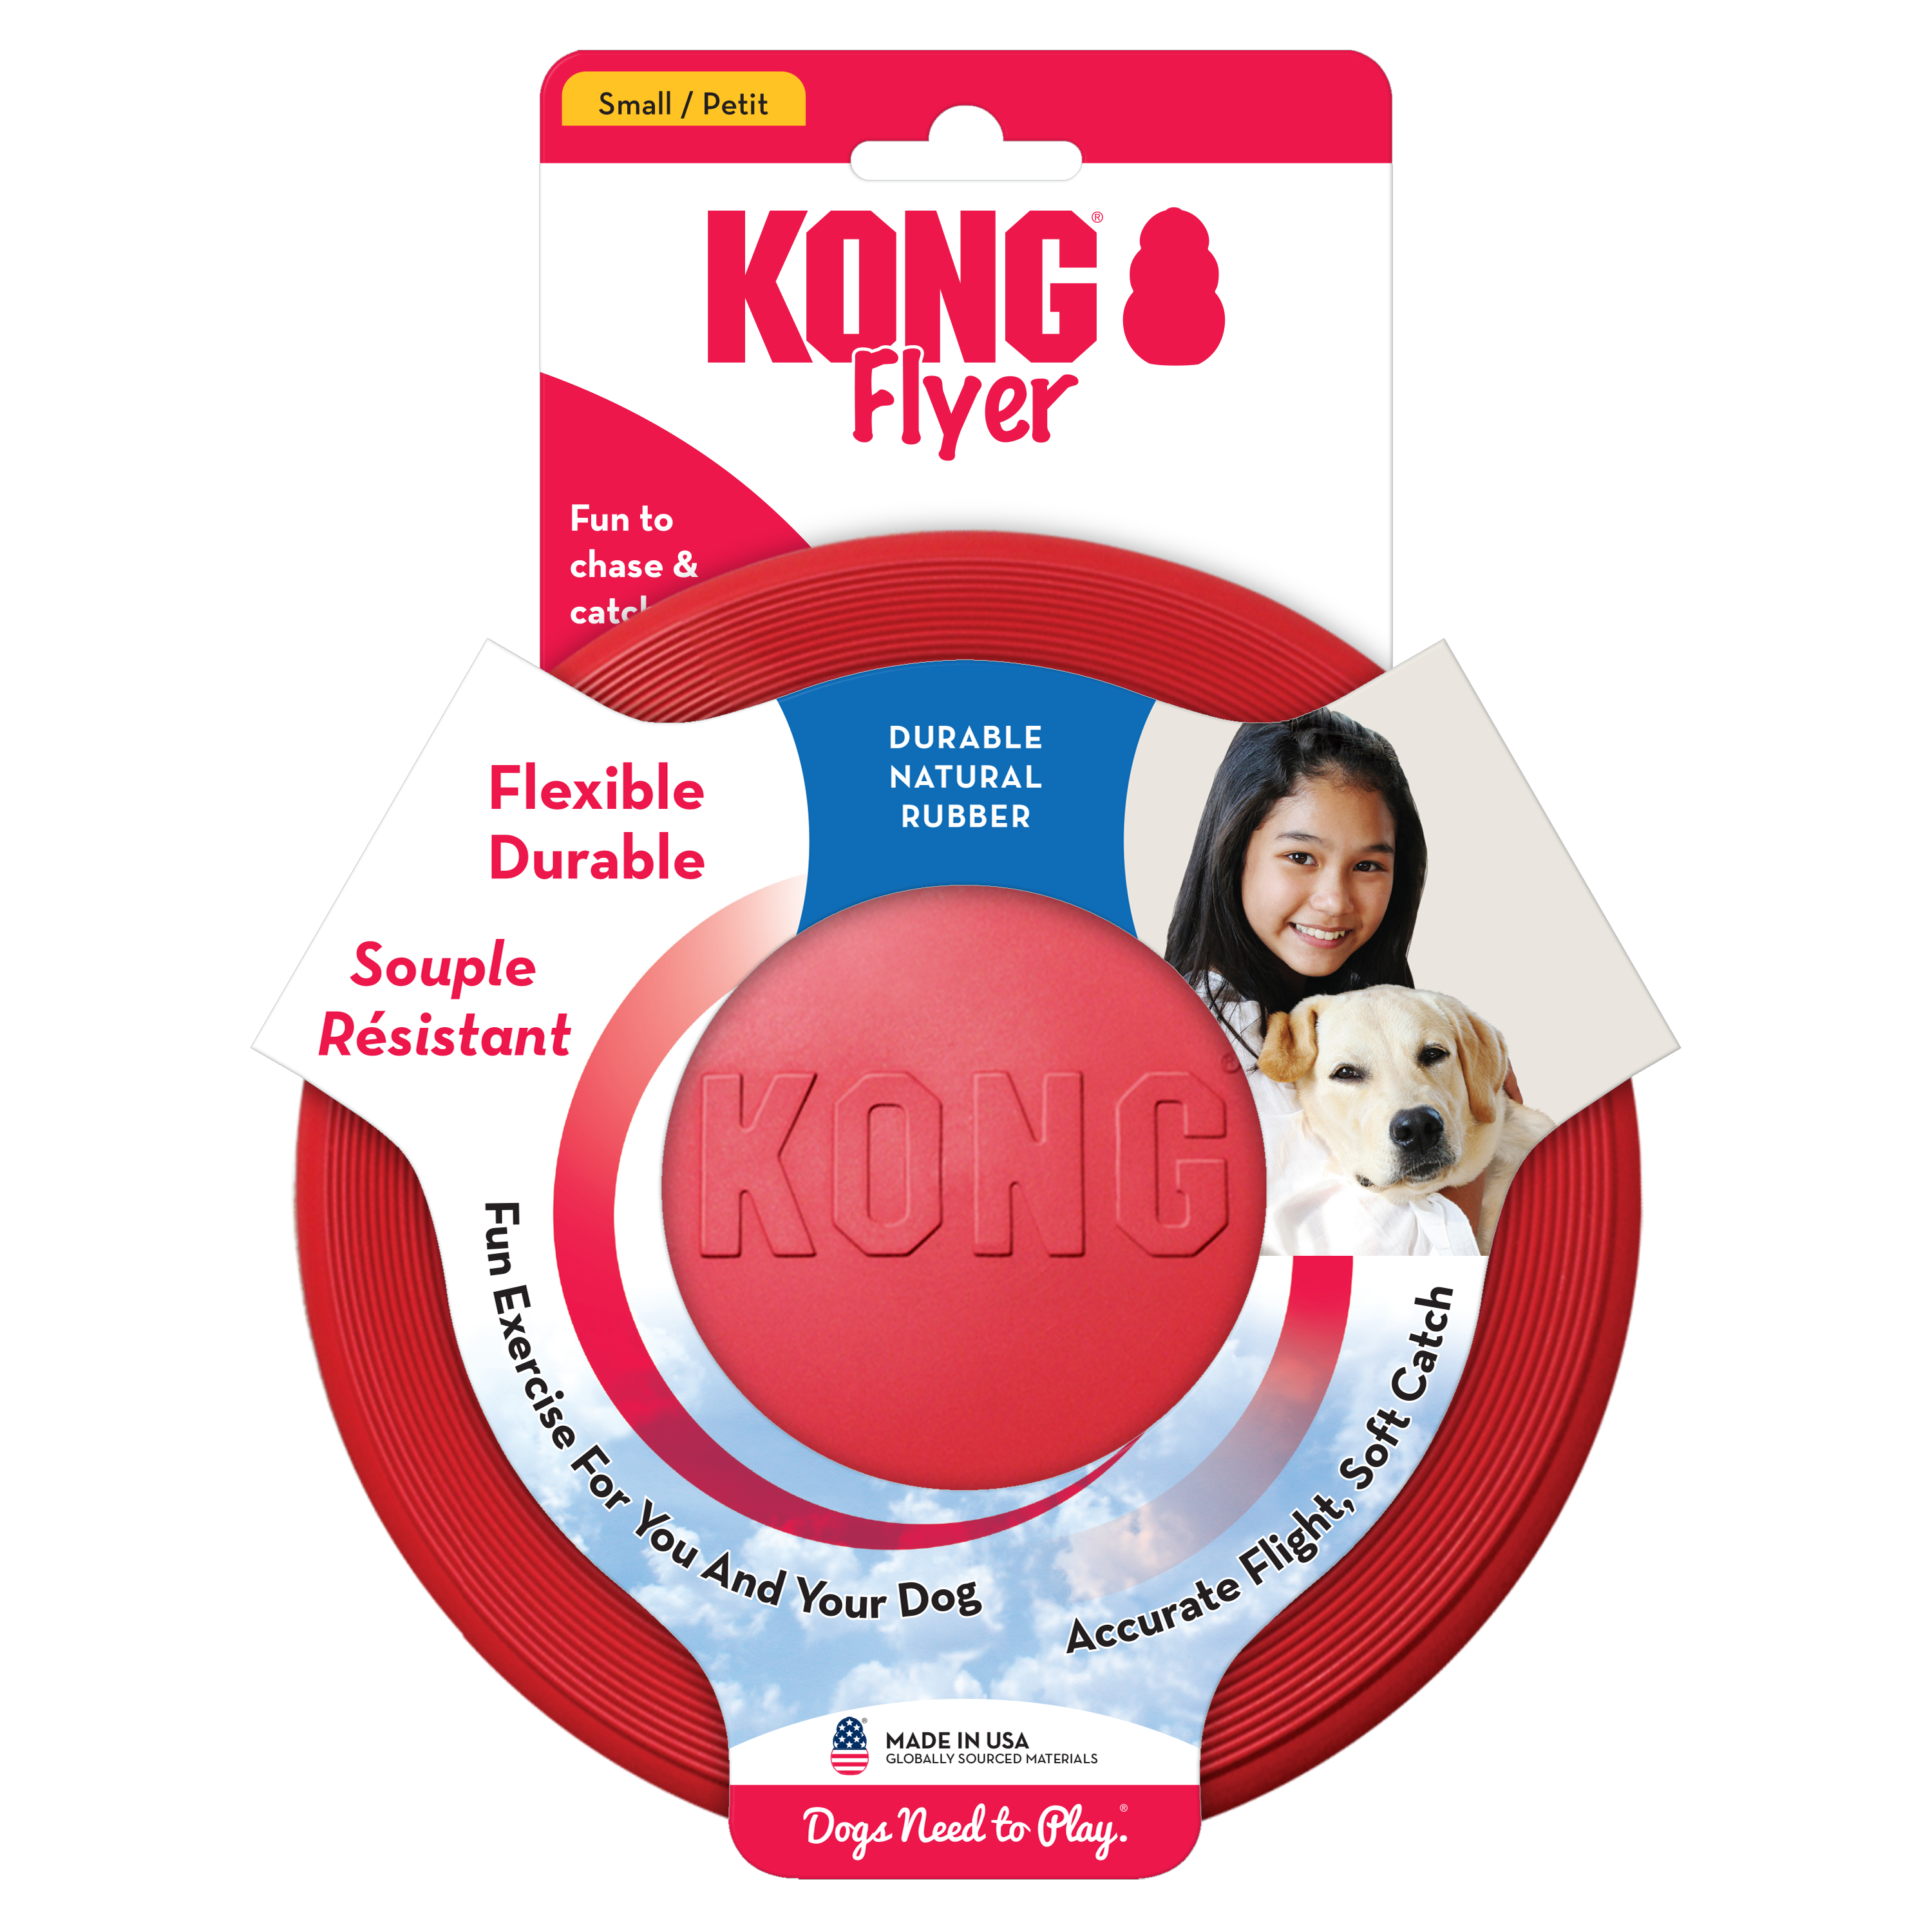 KONG Flyer onpack product image